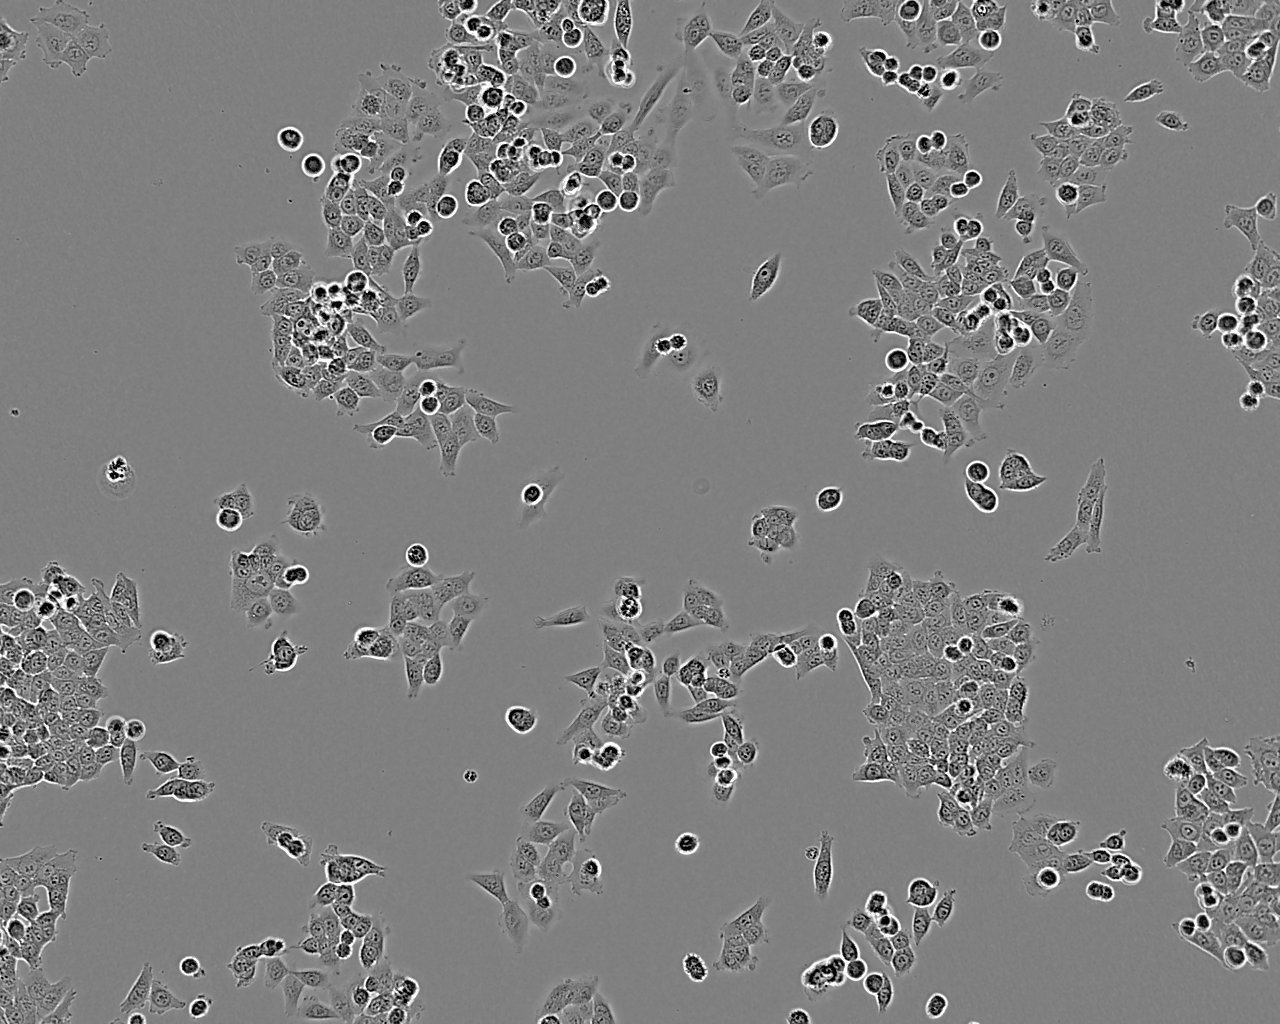 NCI-H1155 epithelioid cells人非小细胞肺癌细胞系,NCI-H1155 epithelioid cells